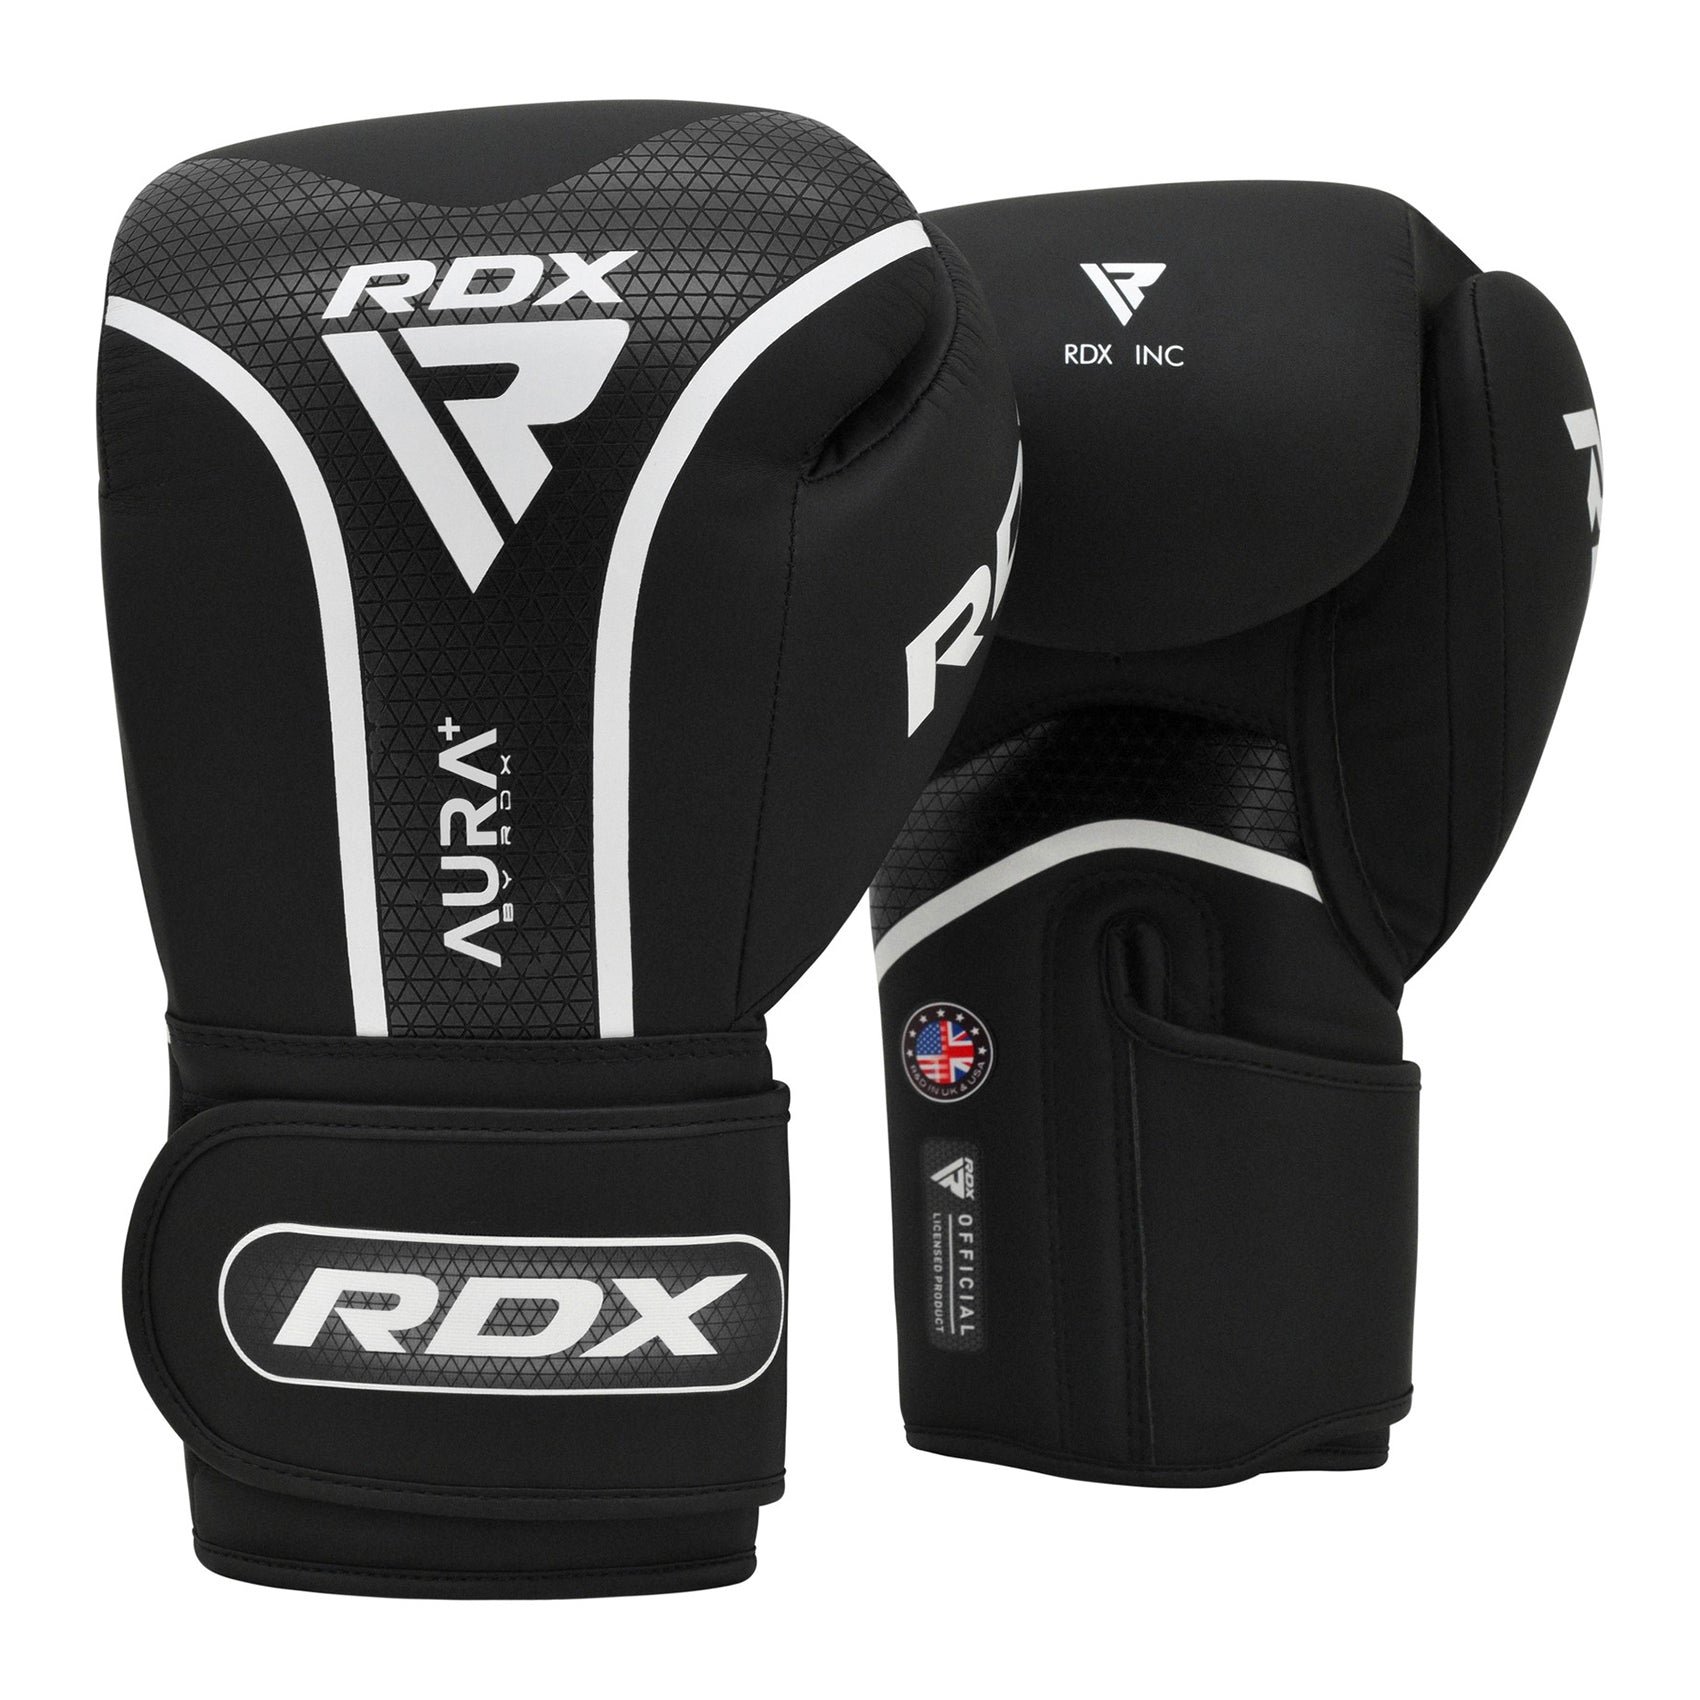 RDX T17 Aura Nova Tech Boxing Sparring Gloves - Matte Black - 10oz - Shock Absorbing Foam, Moisture Wicking for Heavy Punching Bag Training, Kickboxing, Muay Thai, Sparring - Pro-Distributing